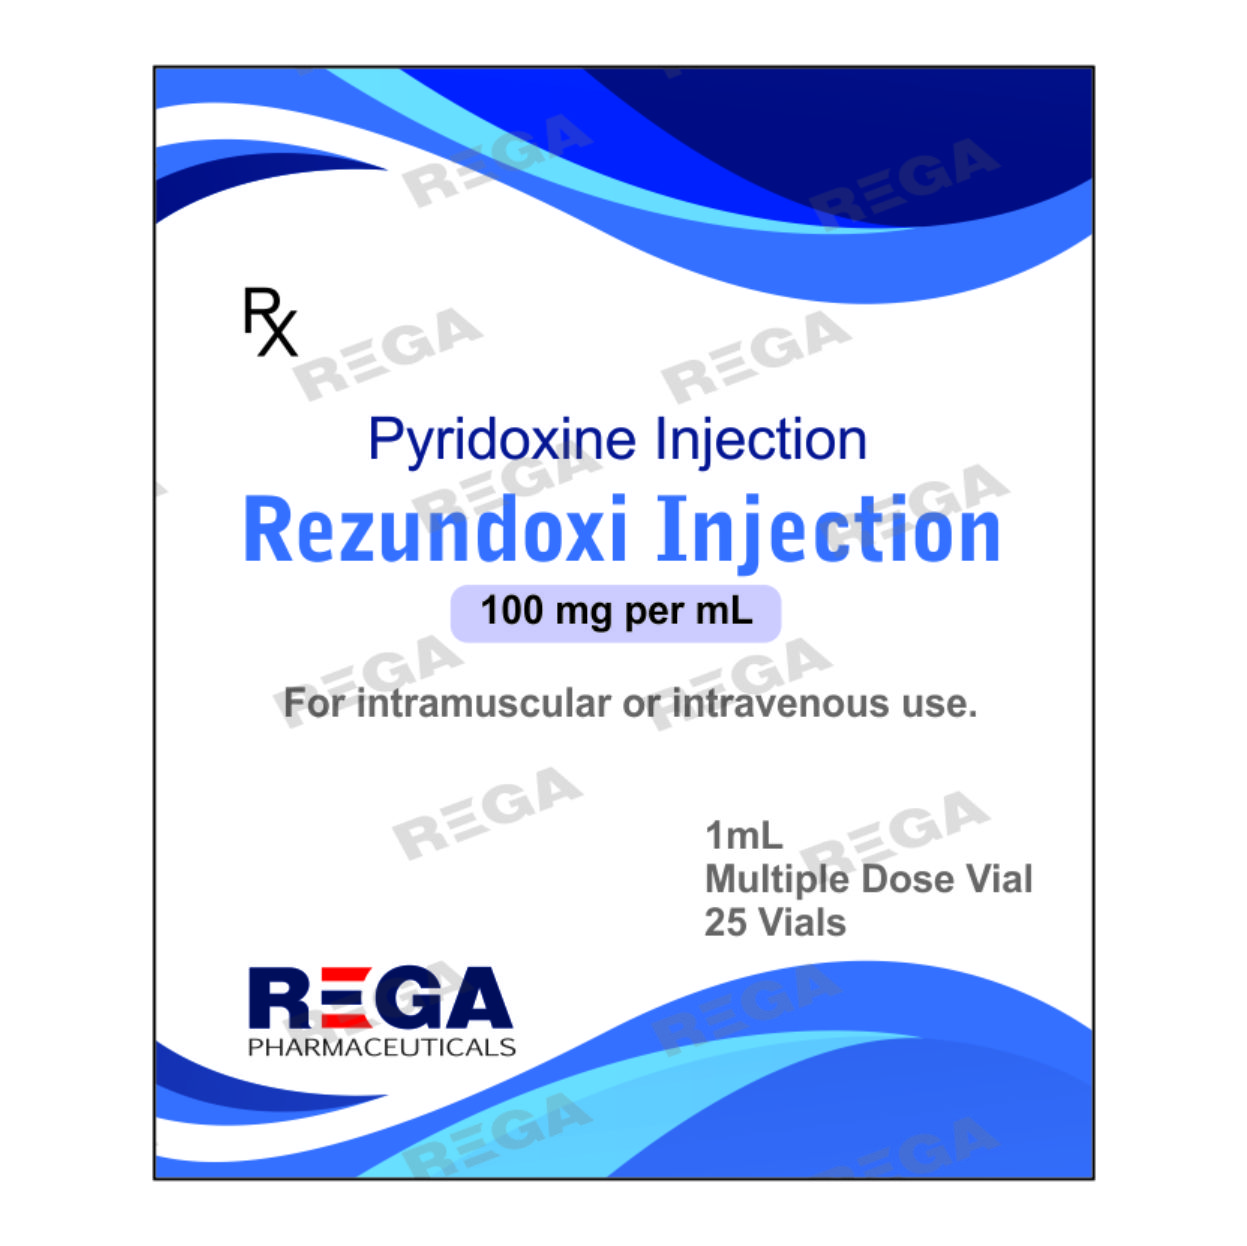 Pyridoxine Injection